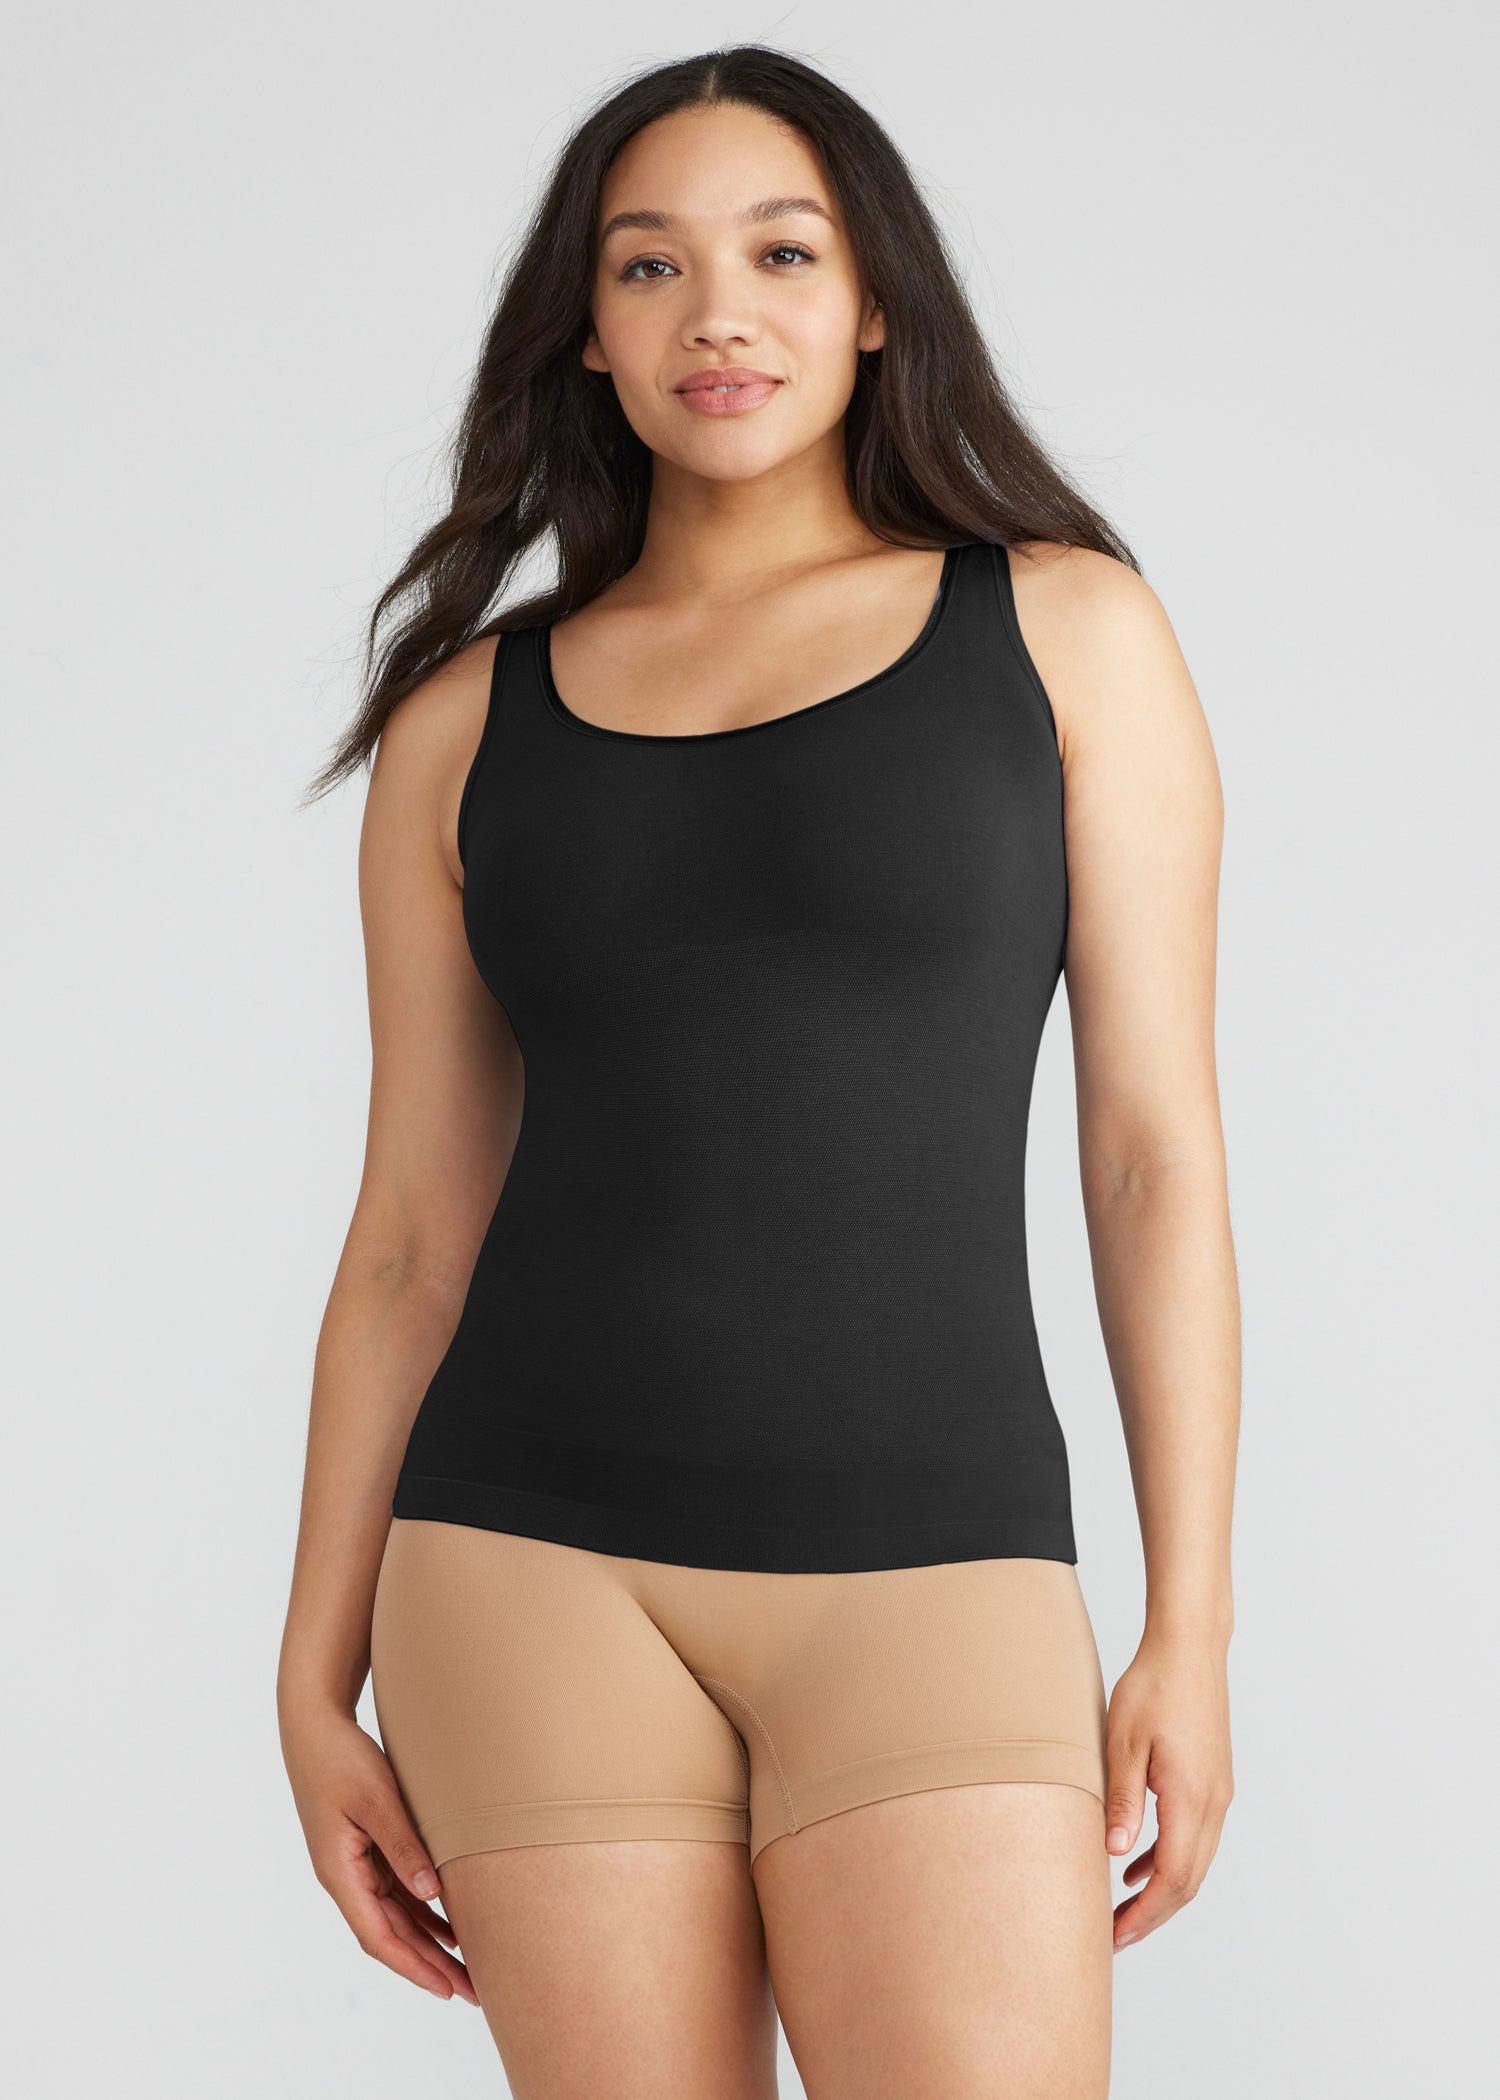  Womens 2PK Tummy Control Shapewear Tank Tops Seamless Square  Neck Compression Tops Slimming Body Shaper Camisole-Black/White S